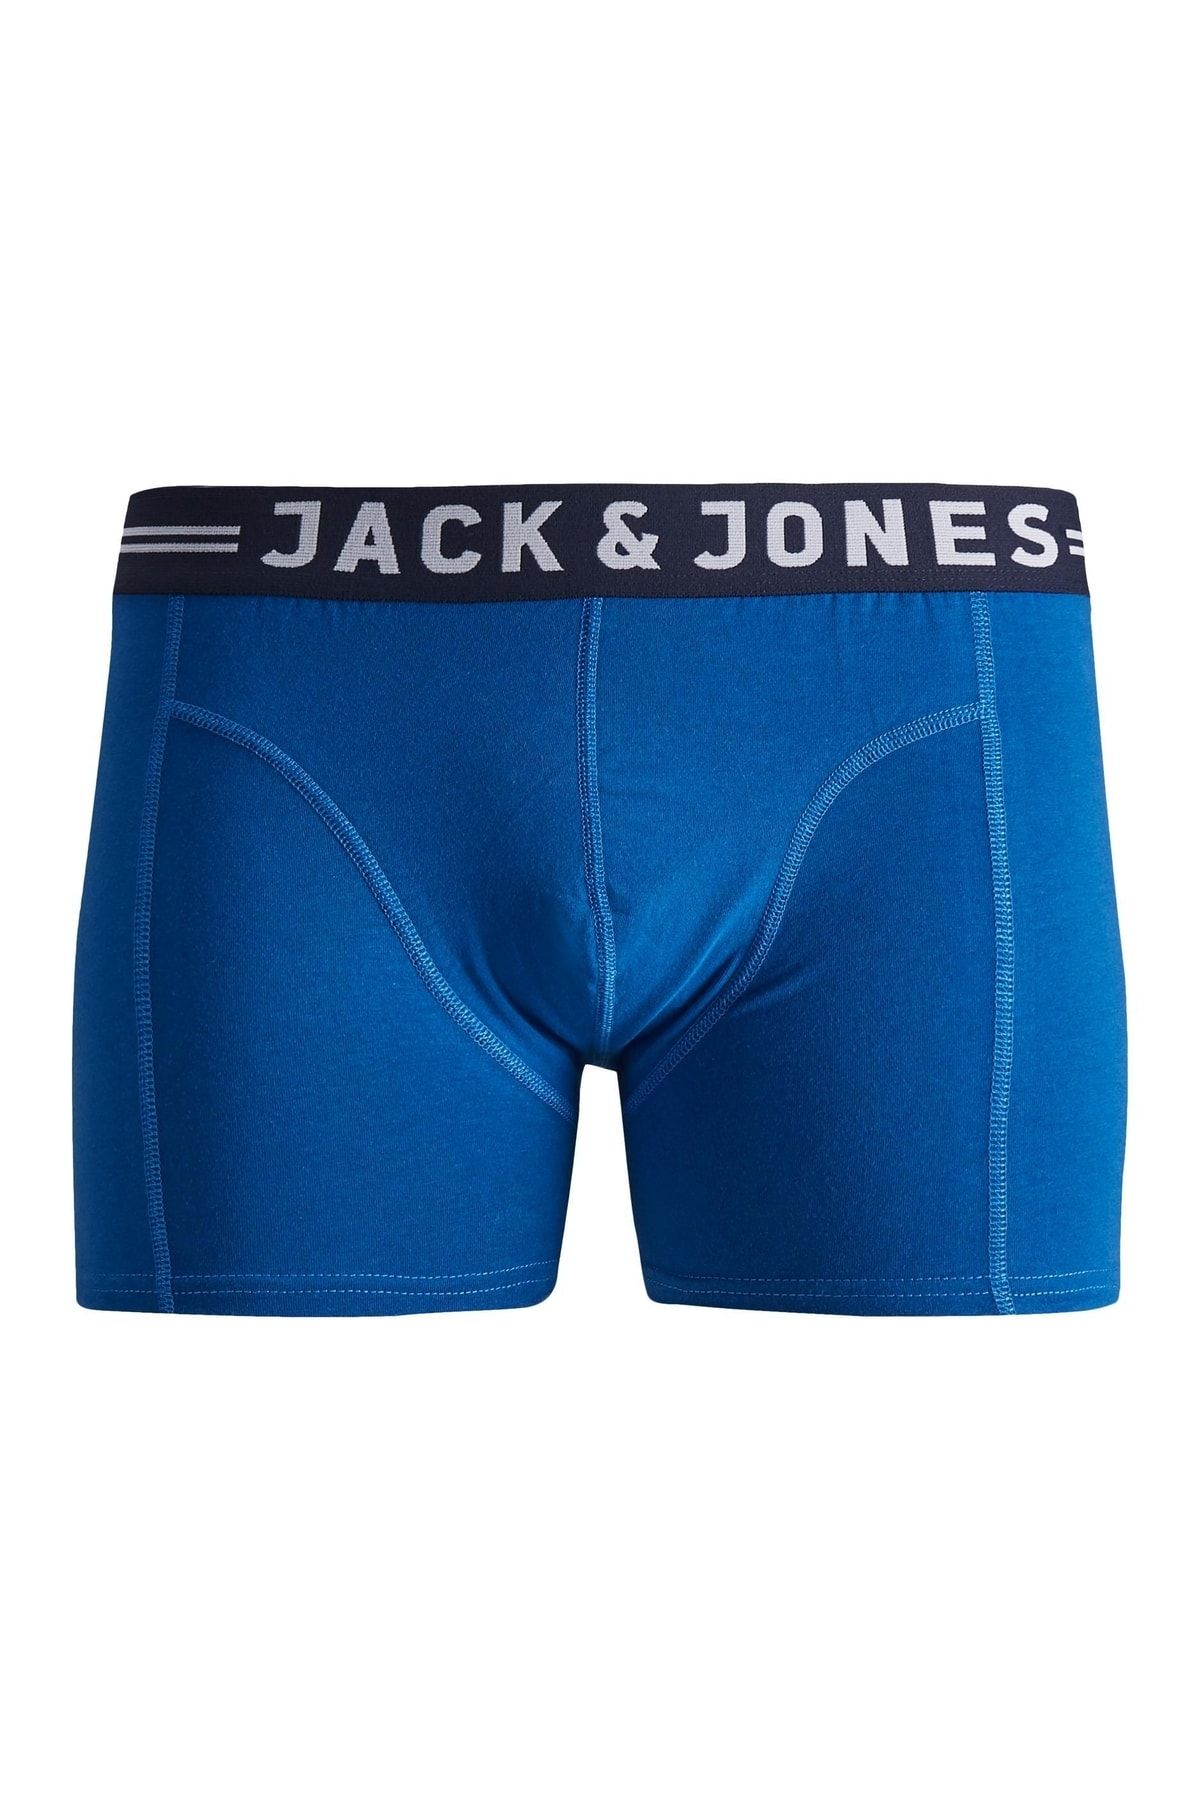 Jack & Jones Sense Mix Color Trunks Noos Erkek Mavi Boxer 12111773-43